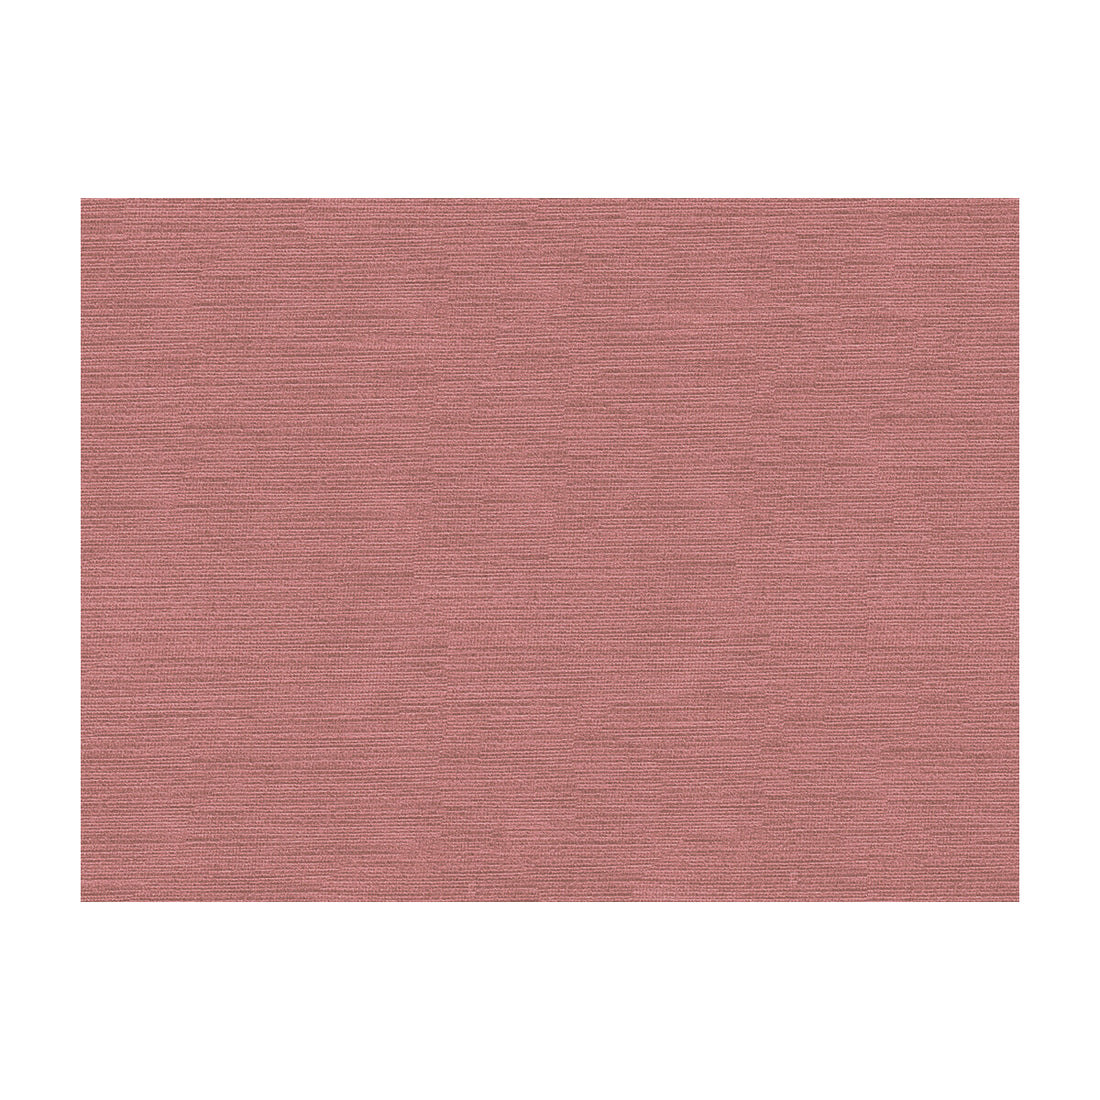 Quillan Velvet fabric in amethyst color - pattern BR-89777.733.0 - by Brunschwig &amp; Fils